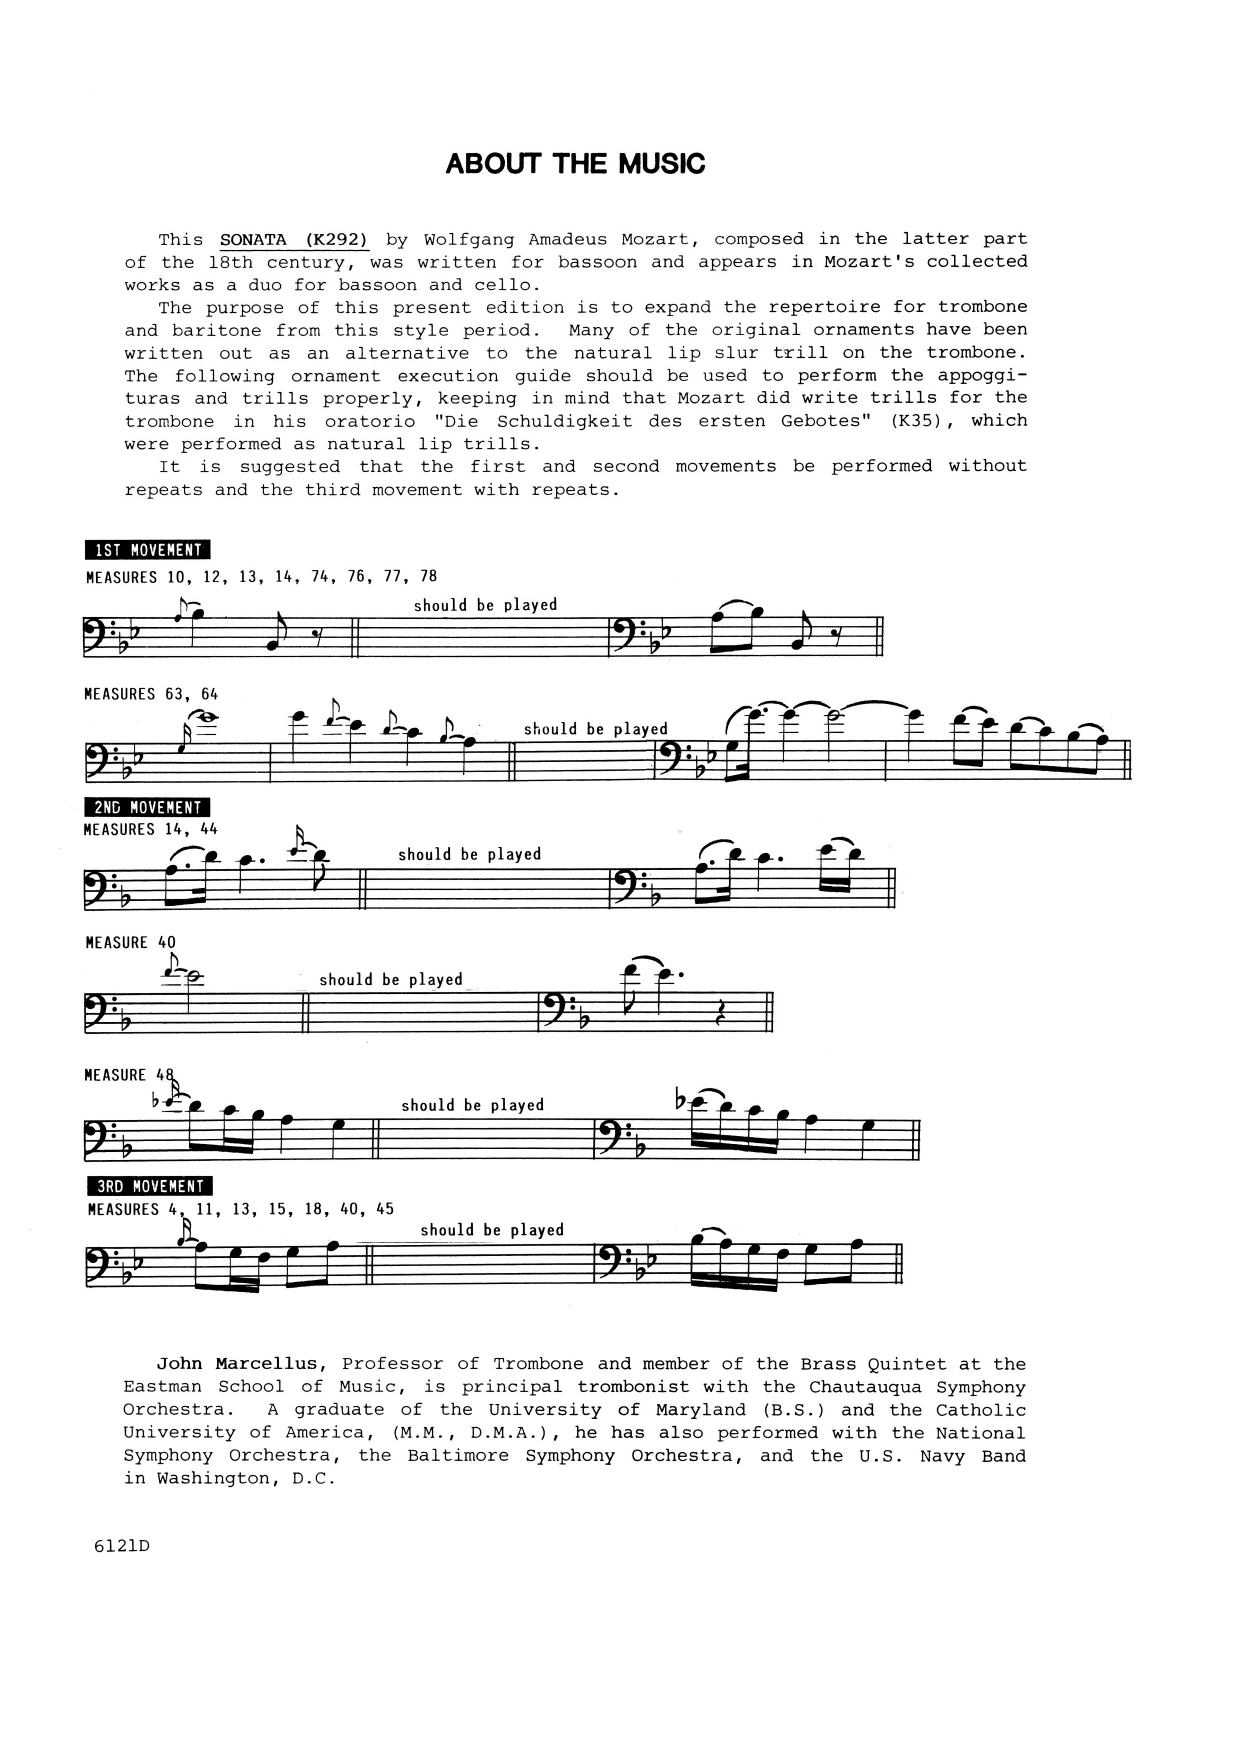 Download John Marcellus Sonata In Bb Major (K292) - Trombone Sheet Music